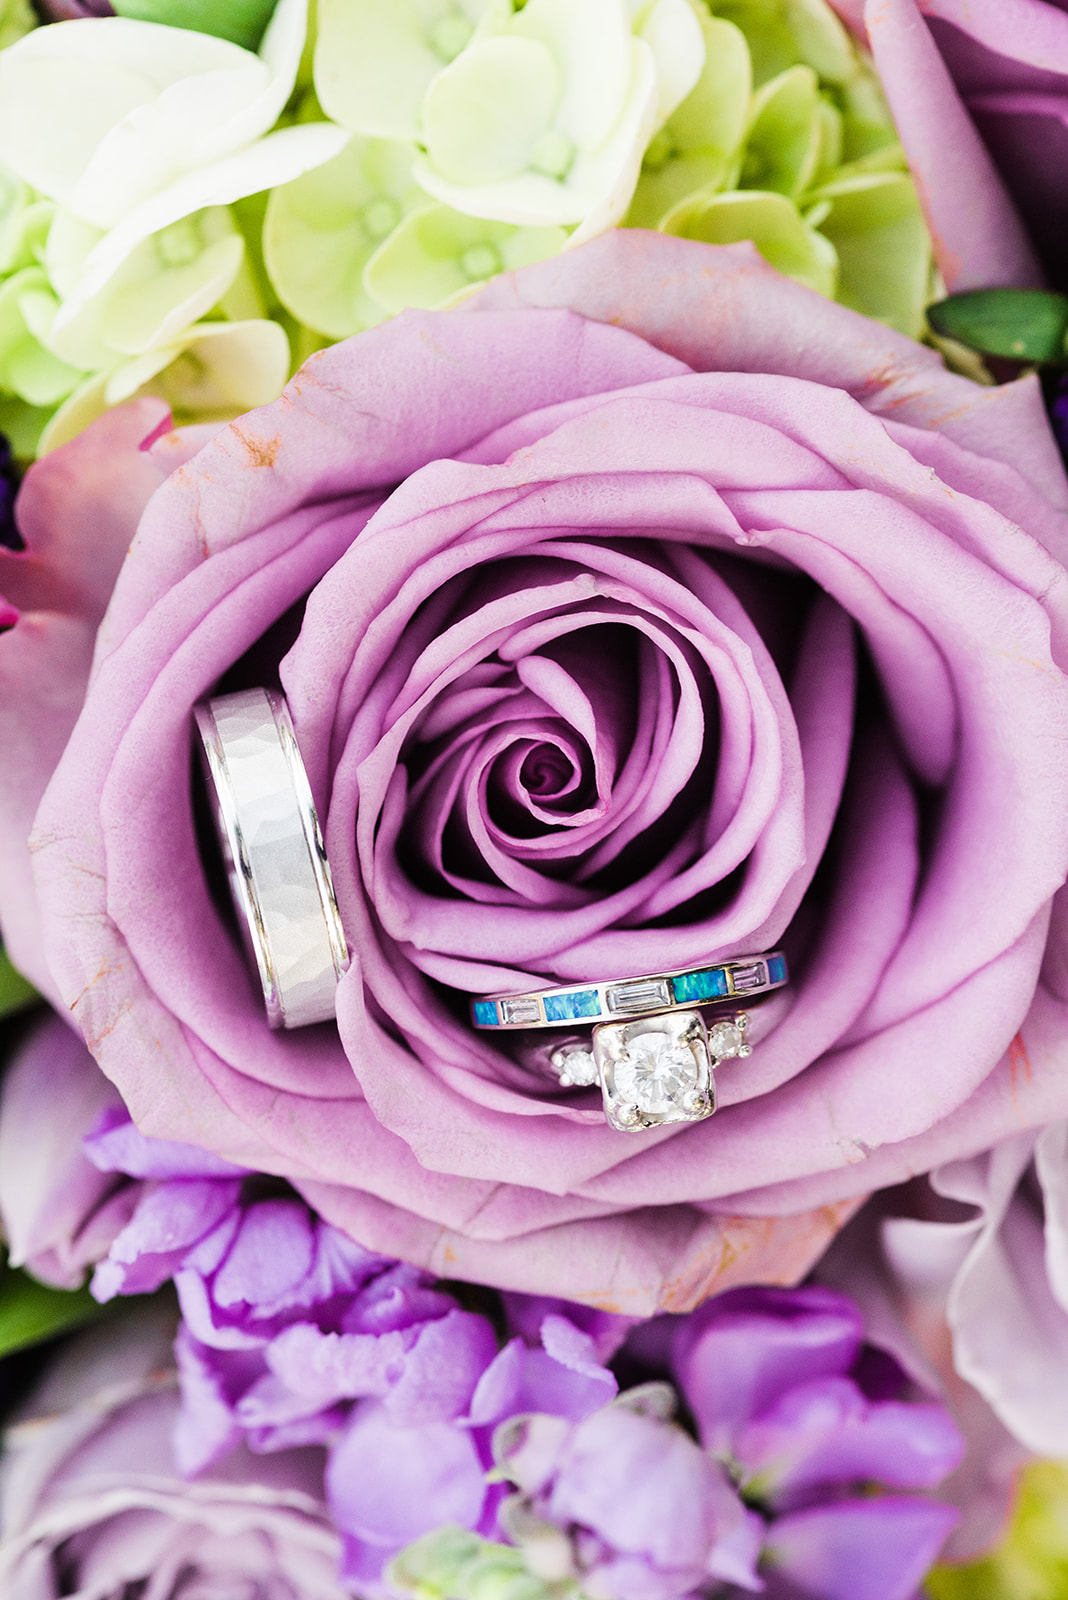 Details of wedding rings sitting in a purple flower